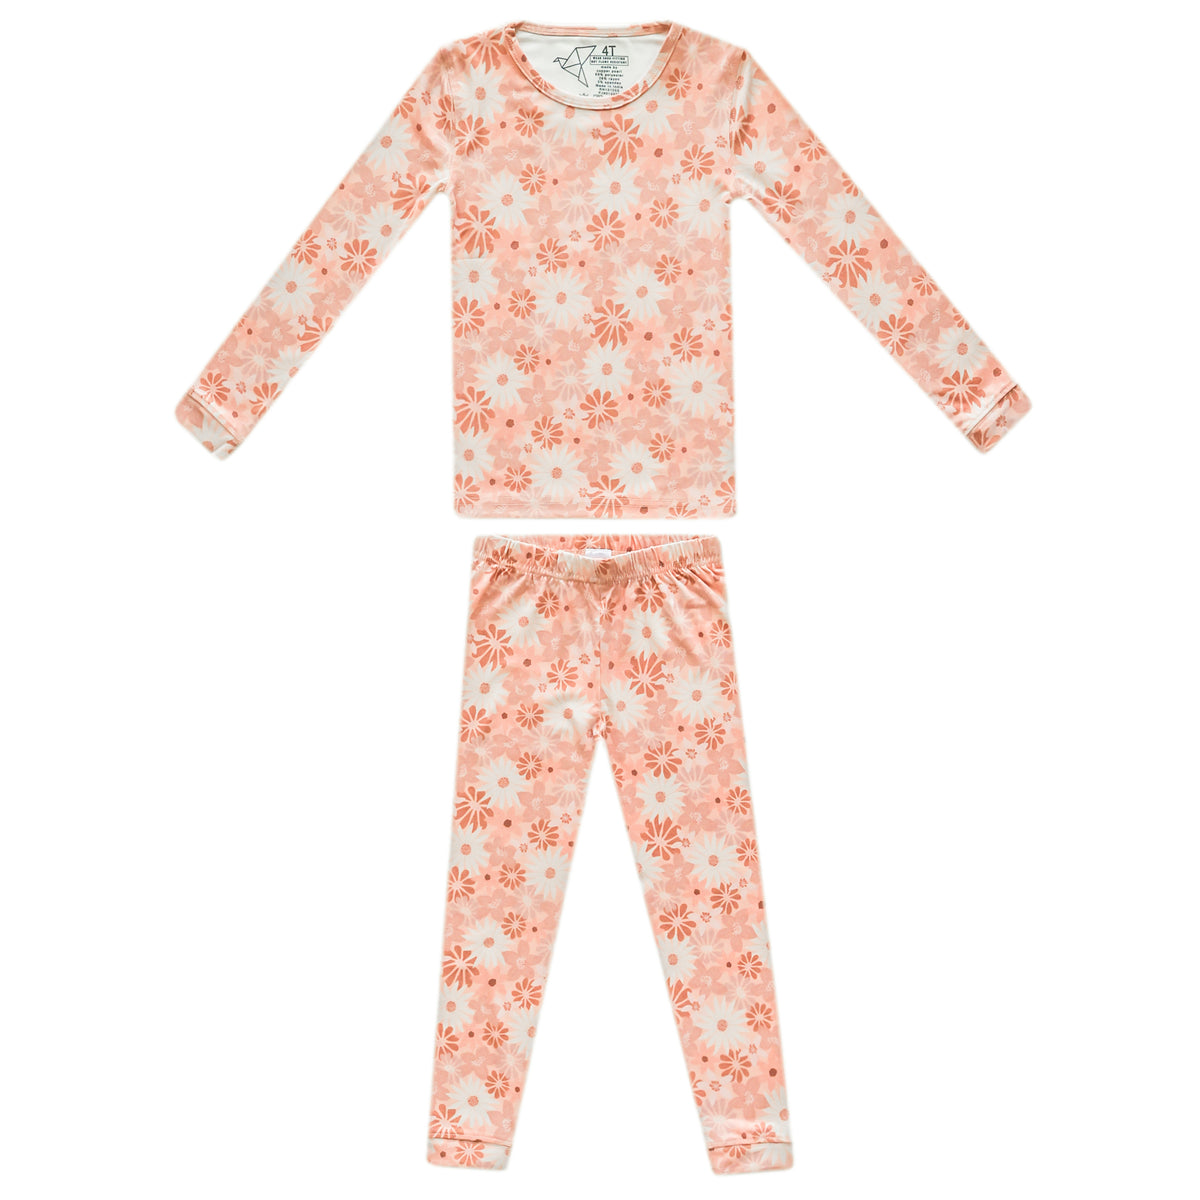 2pc Long Sleeve Pajama Set - Penny